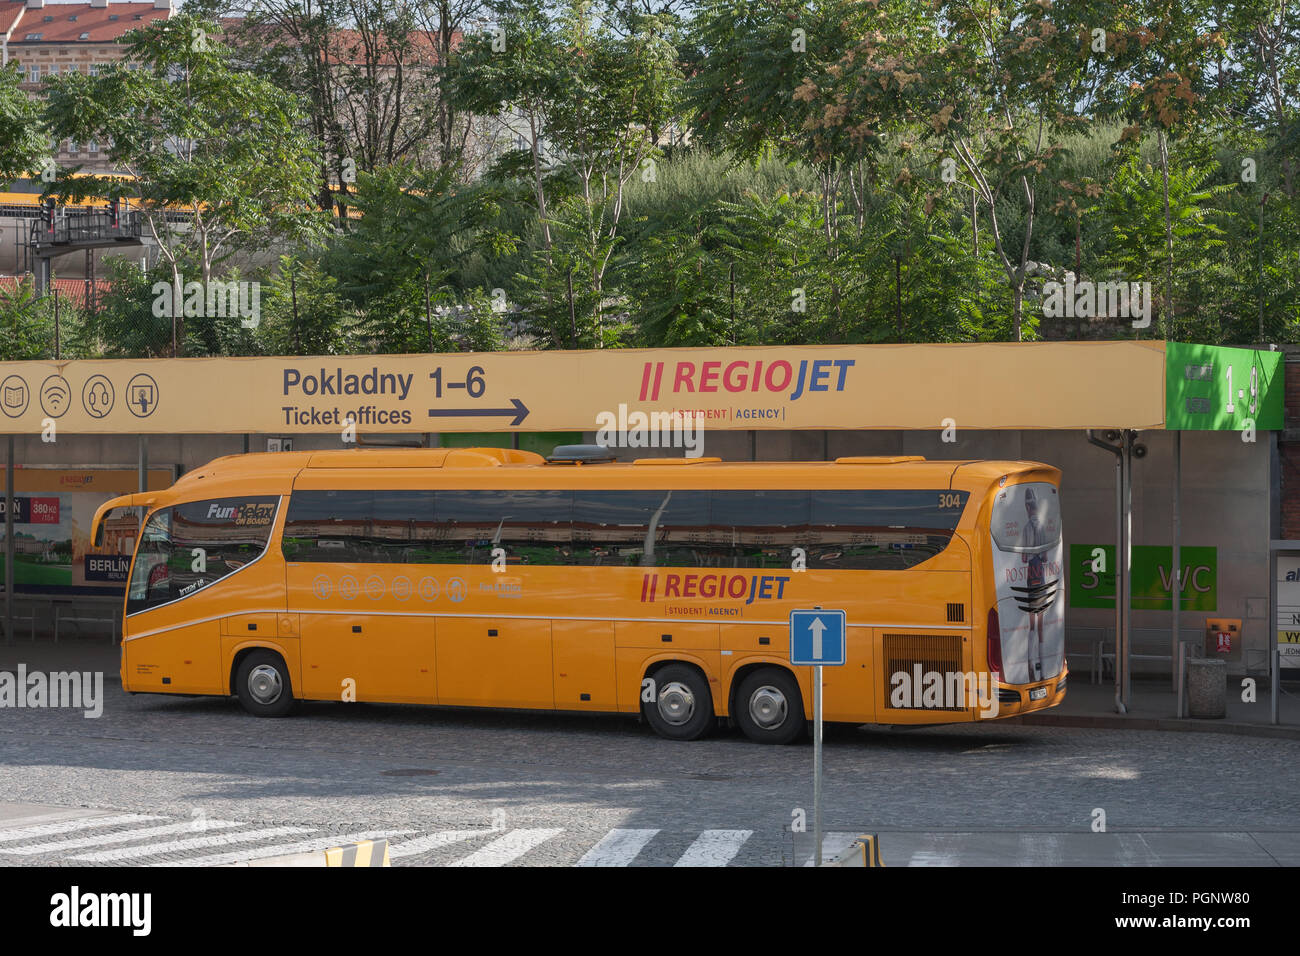 Florenc Bus Station Prague September 42017 Yellow Bus Of Regiojet Is Parking In Florenc Bus